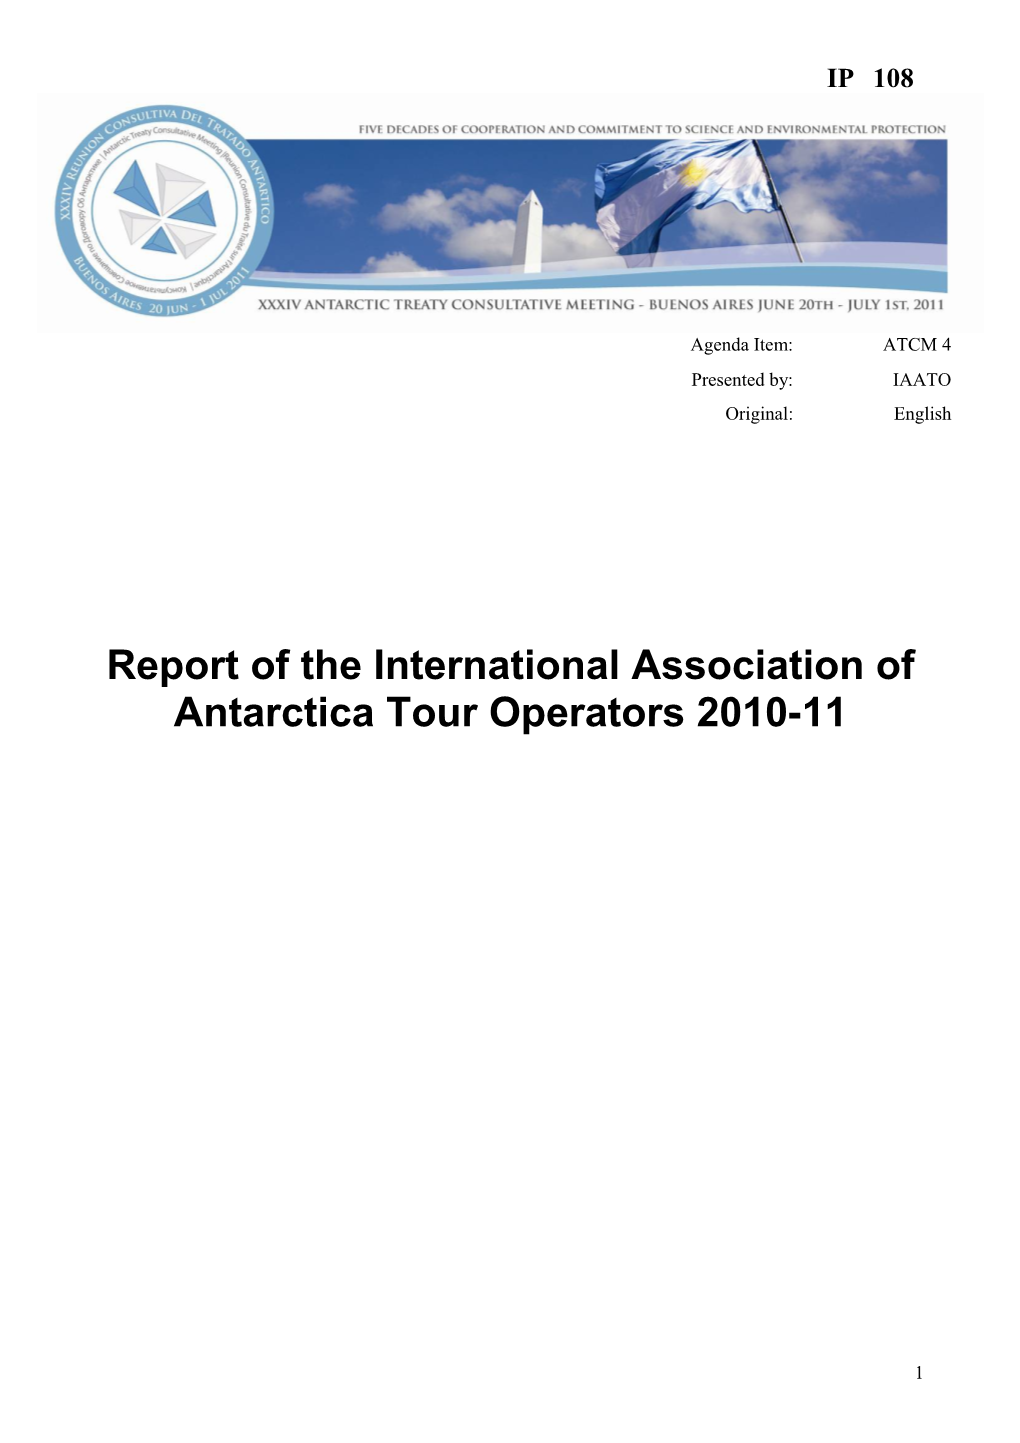 Report of the International Association of Antarctica Tour Operators 2010-11